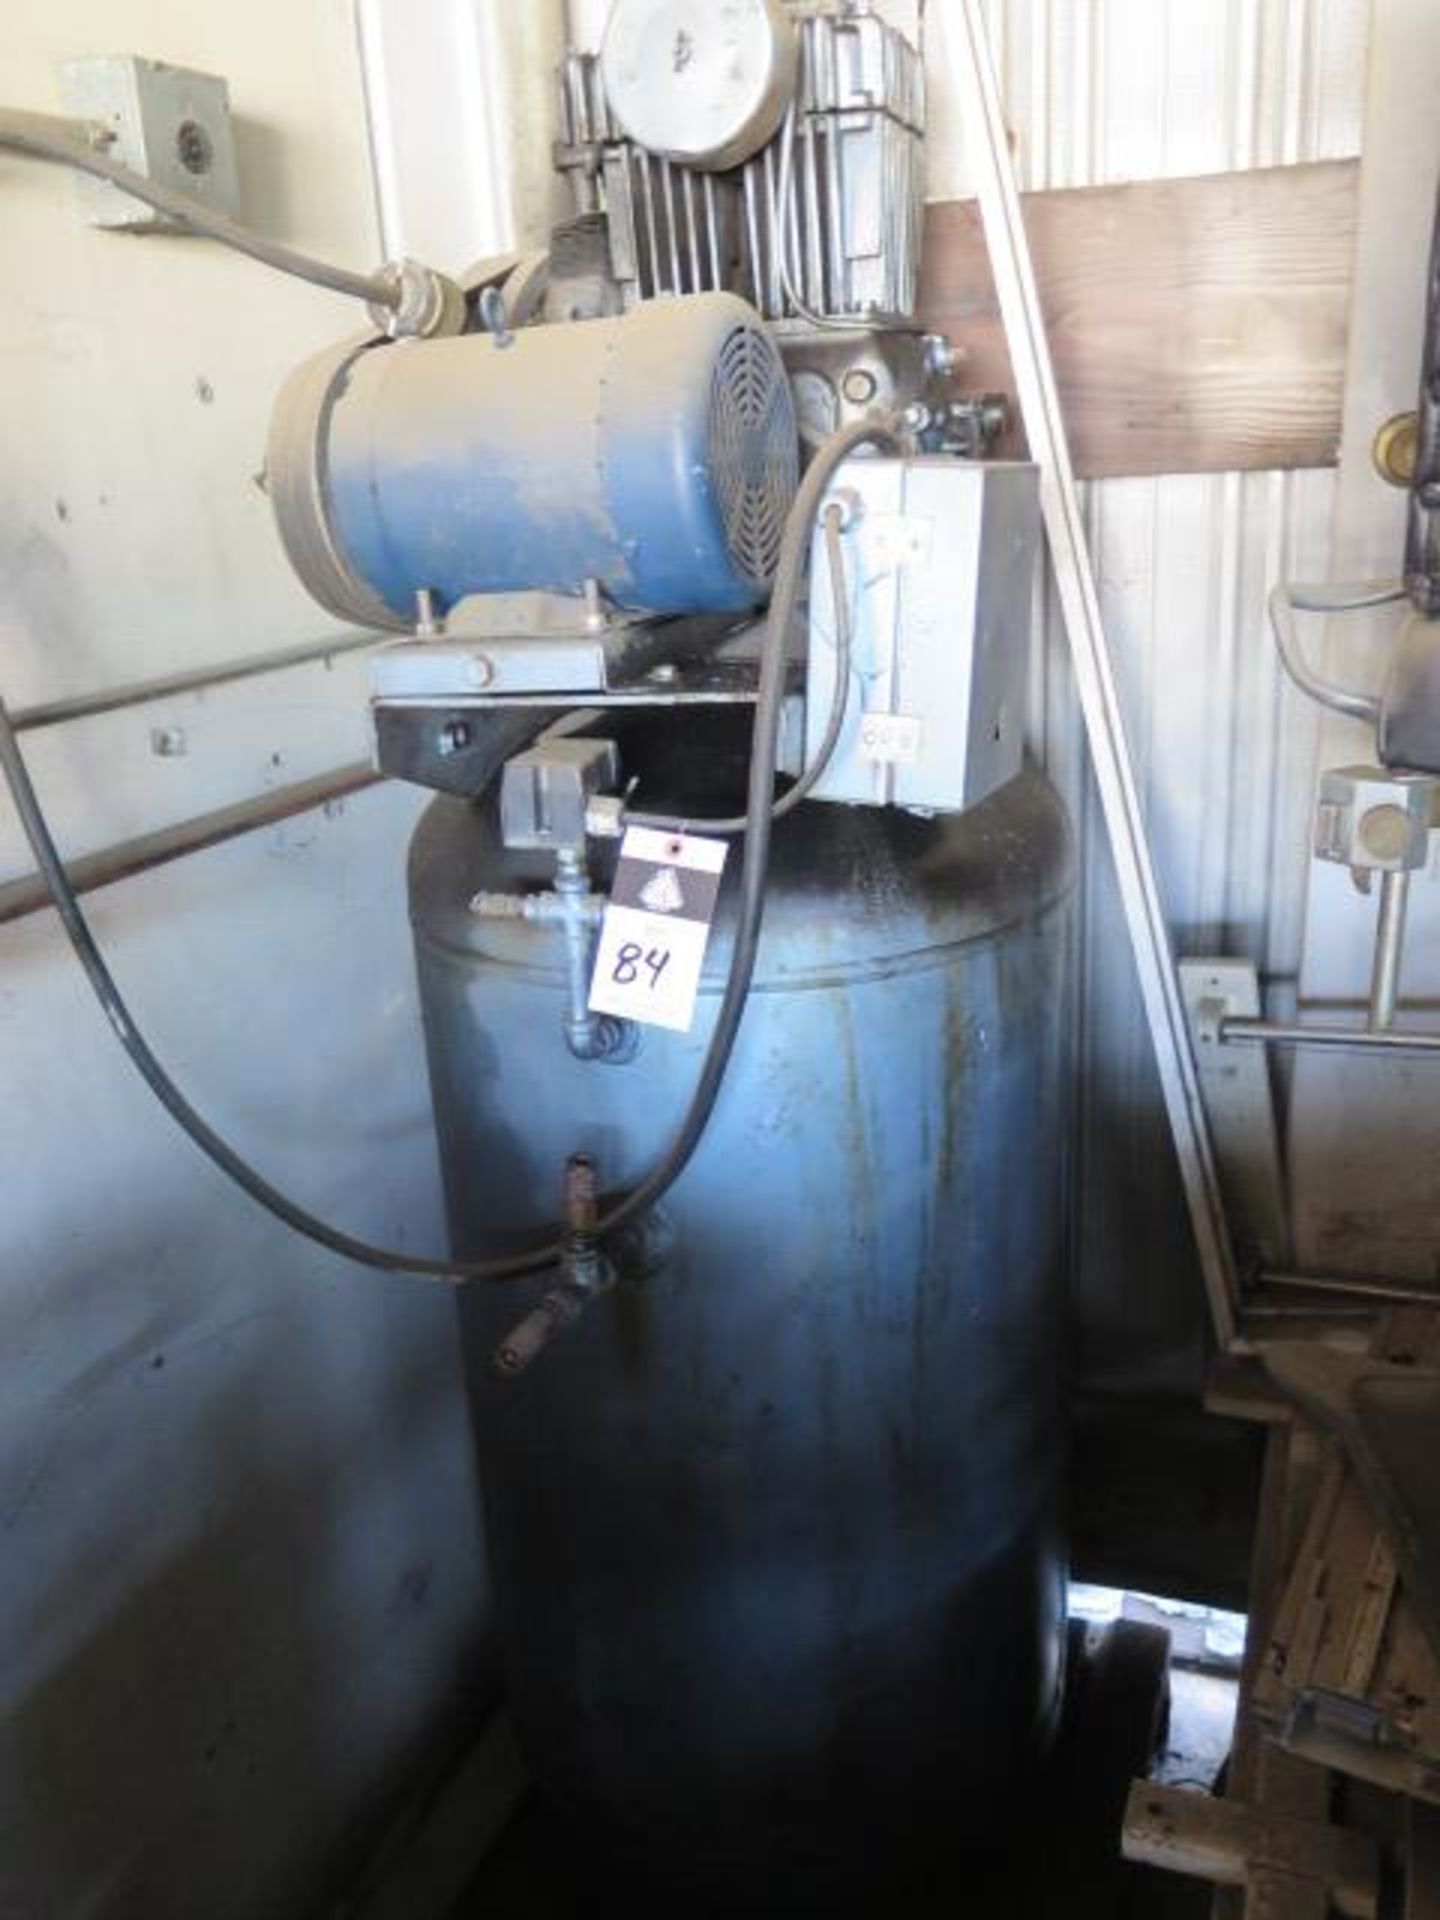 5Hp Vertical Air Compressor (NEEDS REPAIR) w/ 60 Gallon Tank (SOLD AS-IS - NO WARRANTY)